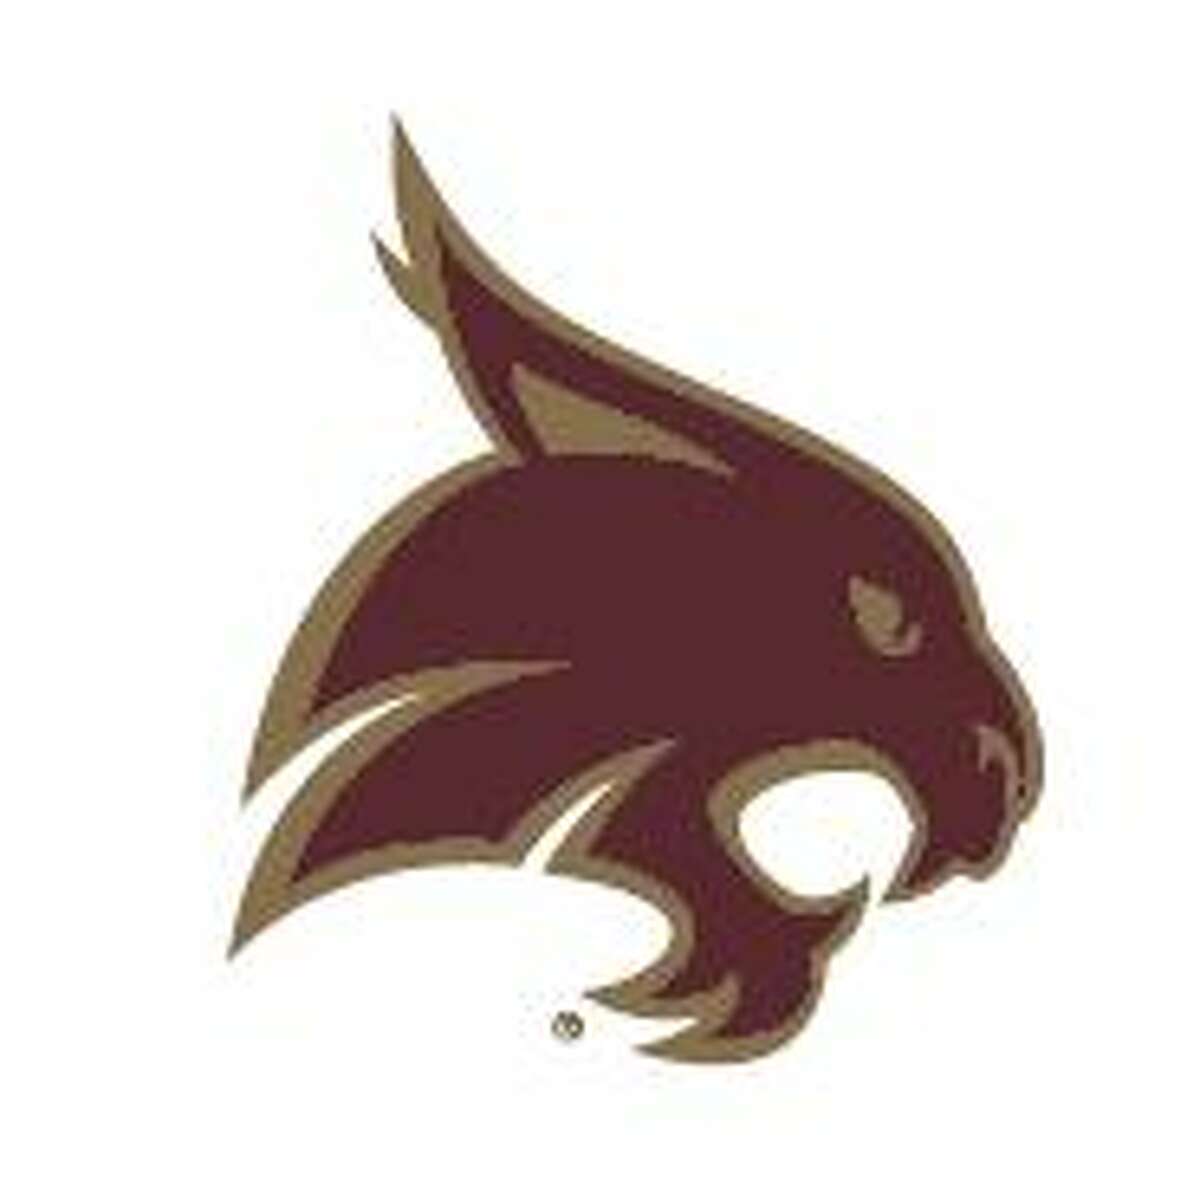 Texas State's official bobcat logo